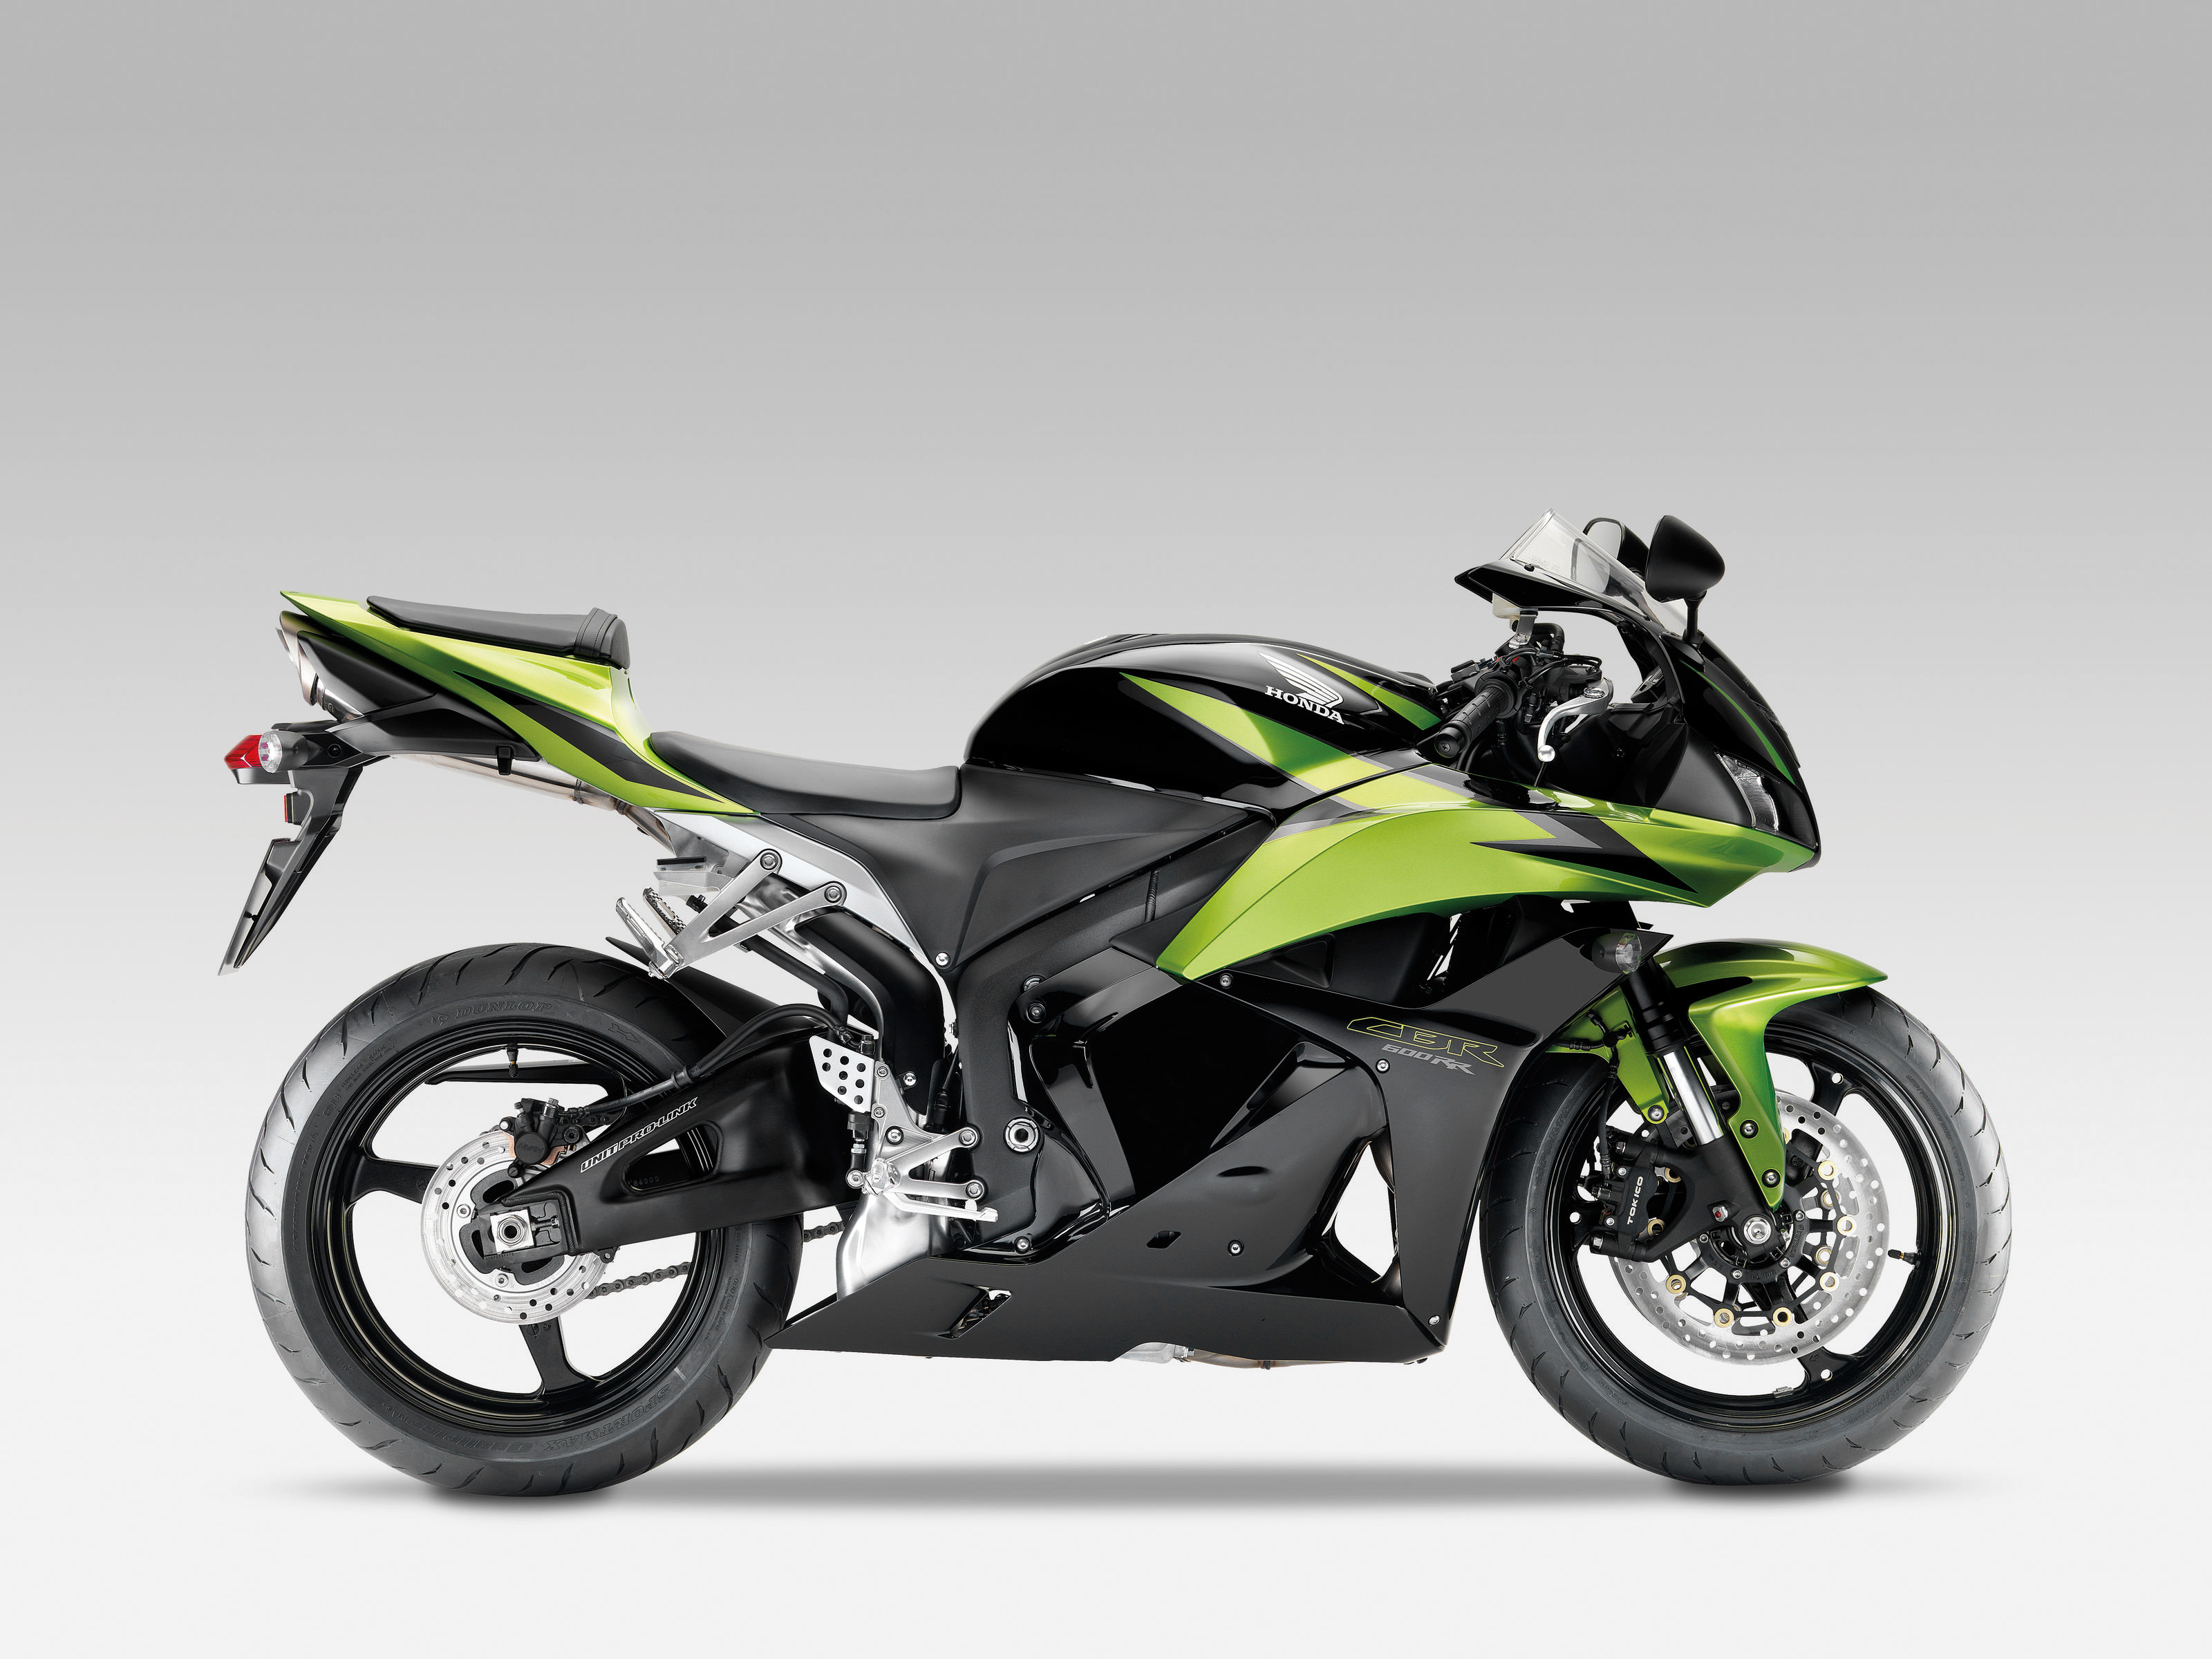 HD desktop wallpaper: Honda, Motorcycle, Bike, Honda Cbr600Rr, Vehicles  download free picture #288183